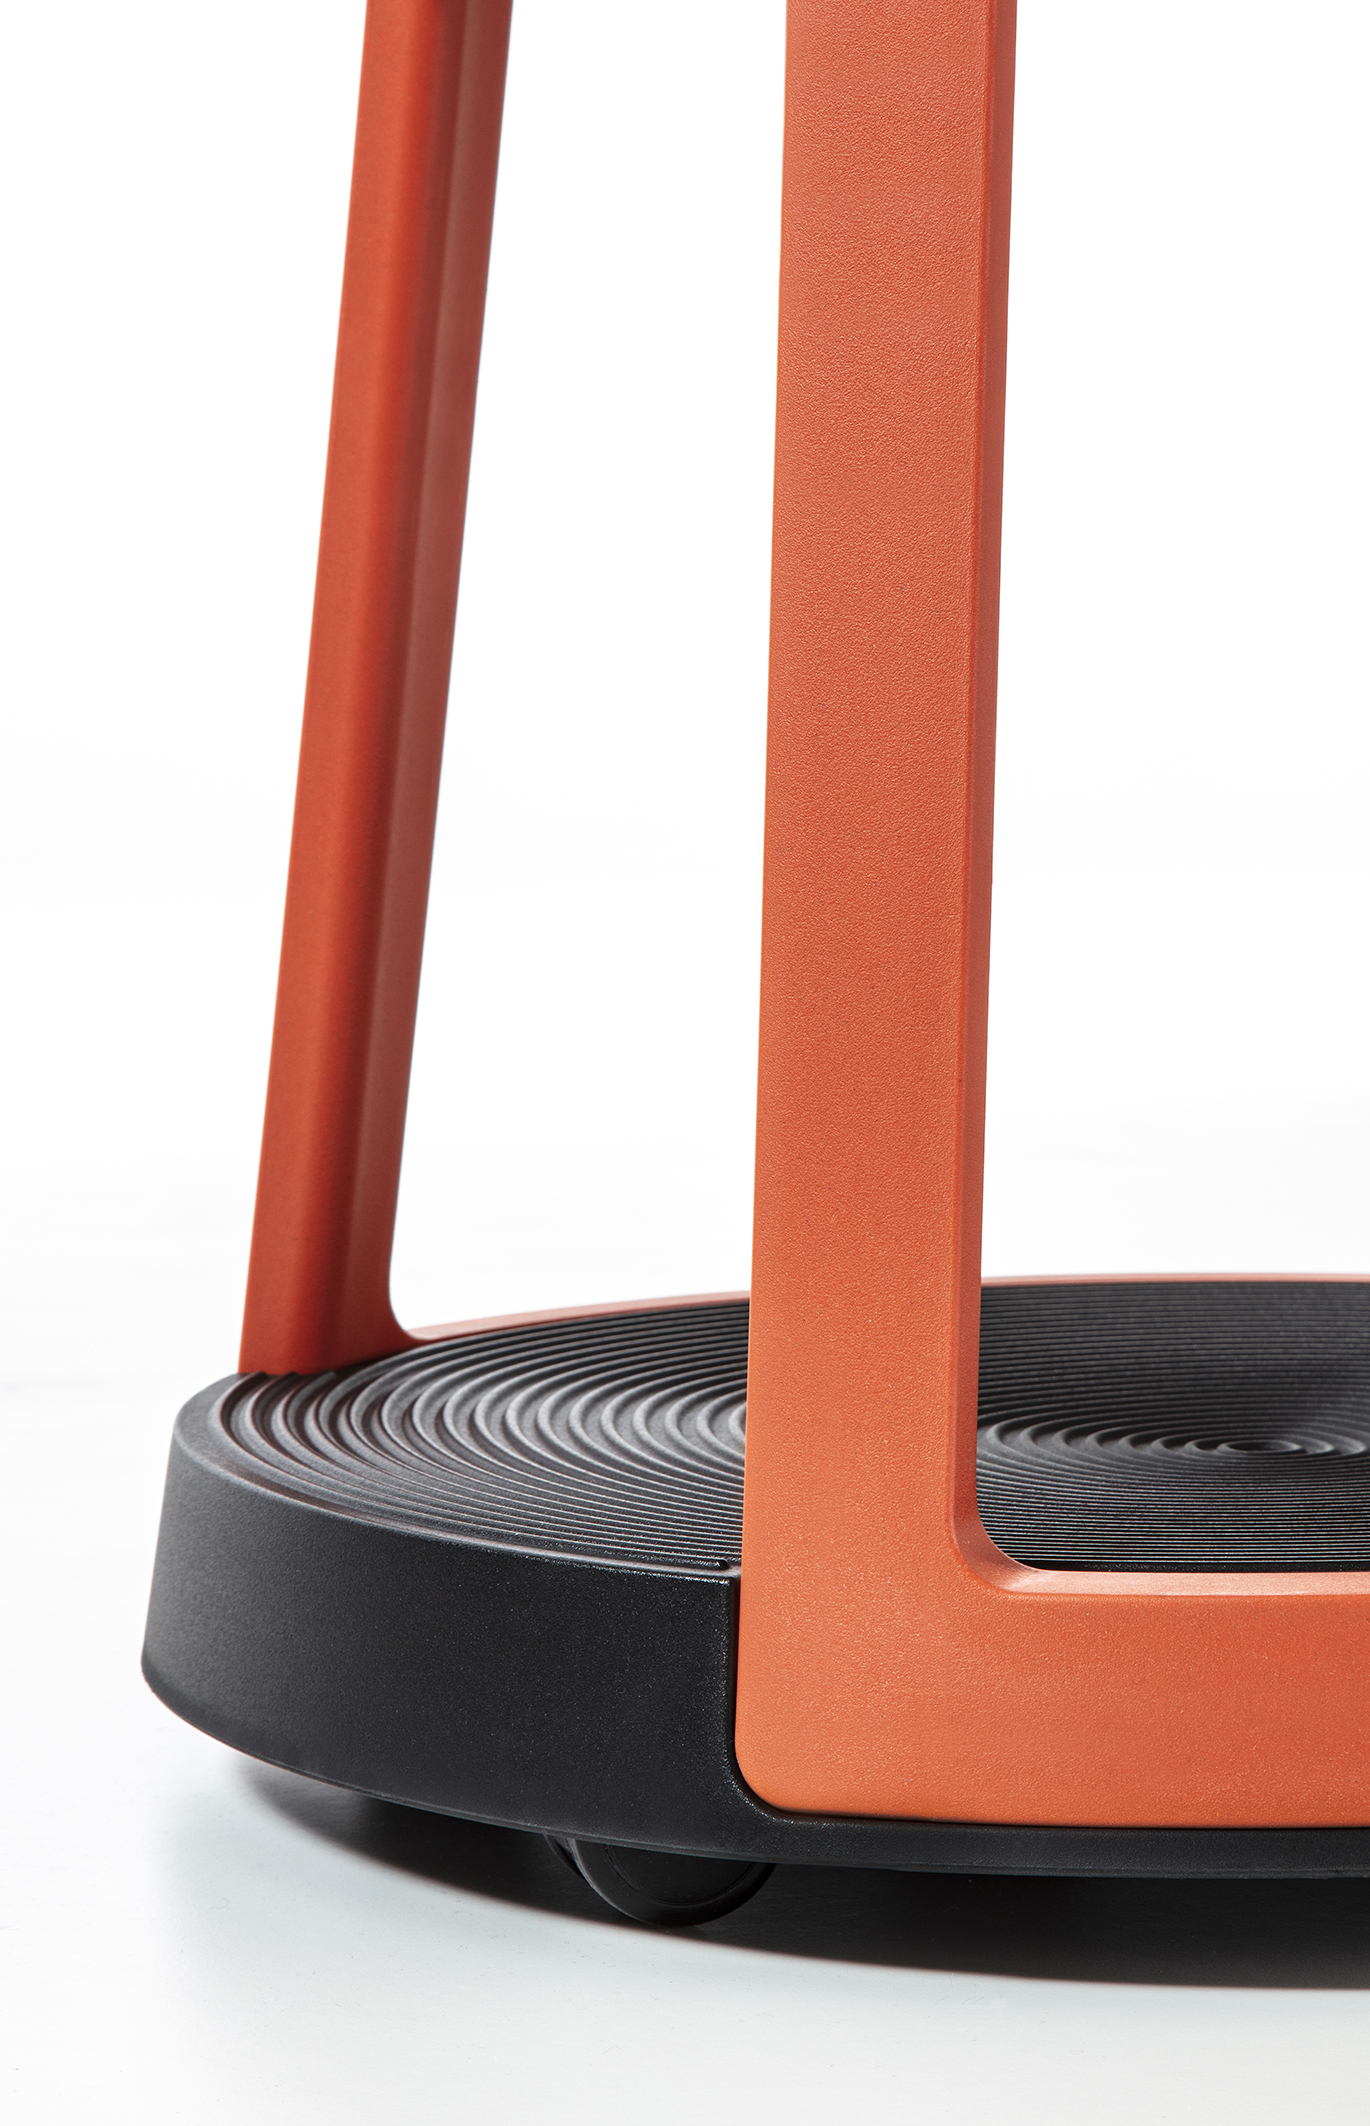 Revo - An original smart chair for office, smart office, laboratory.